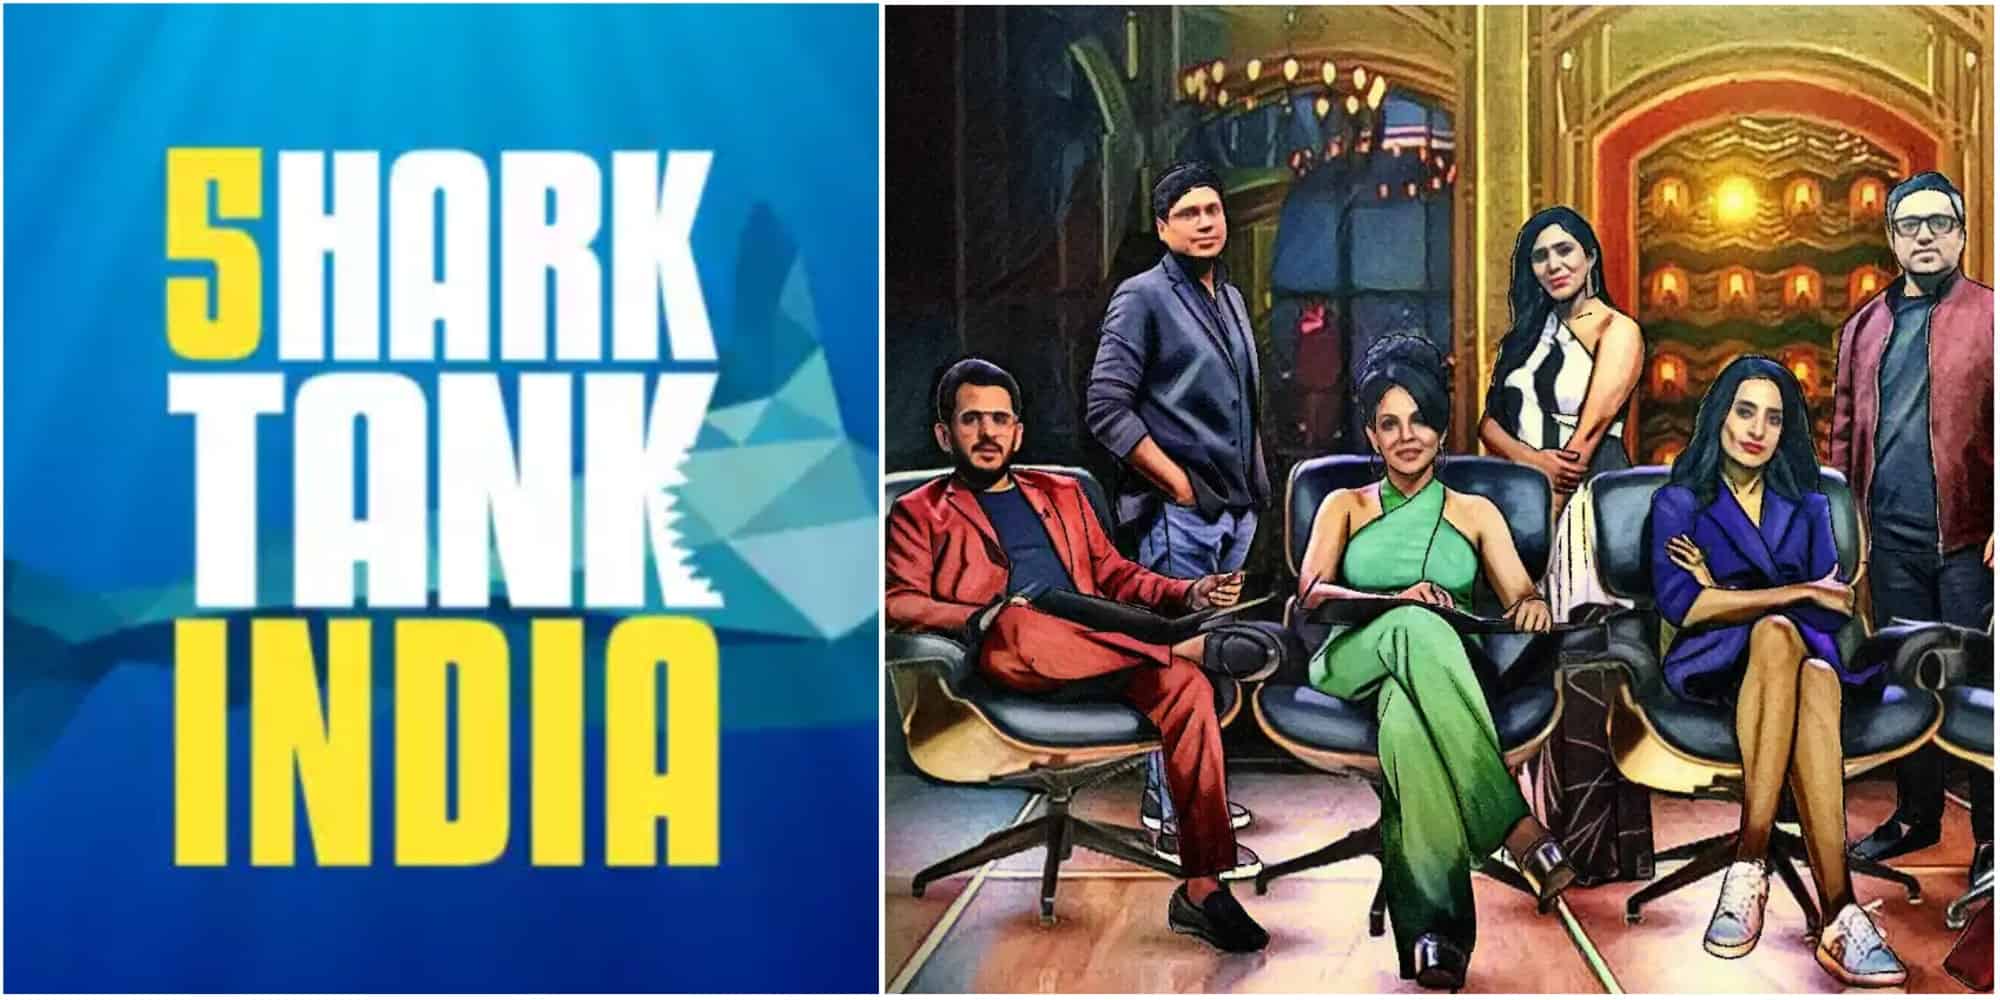 Shark Tank India Business Series Season 2 Episode 36